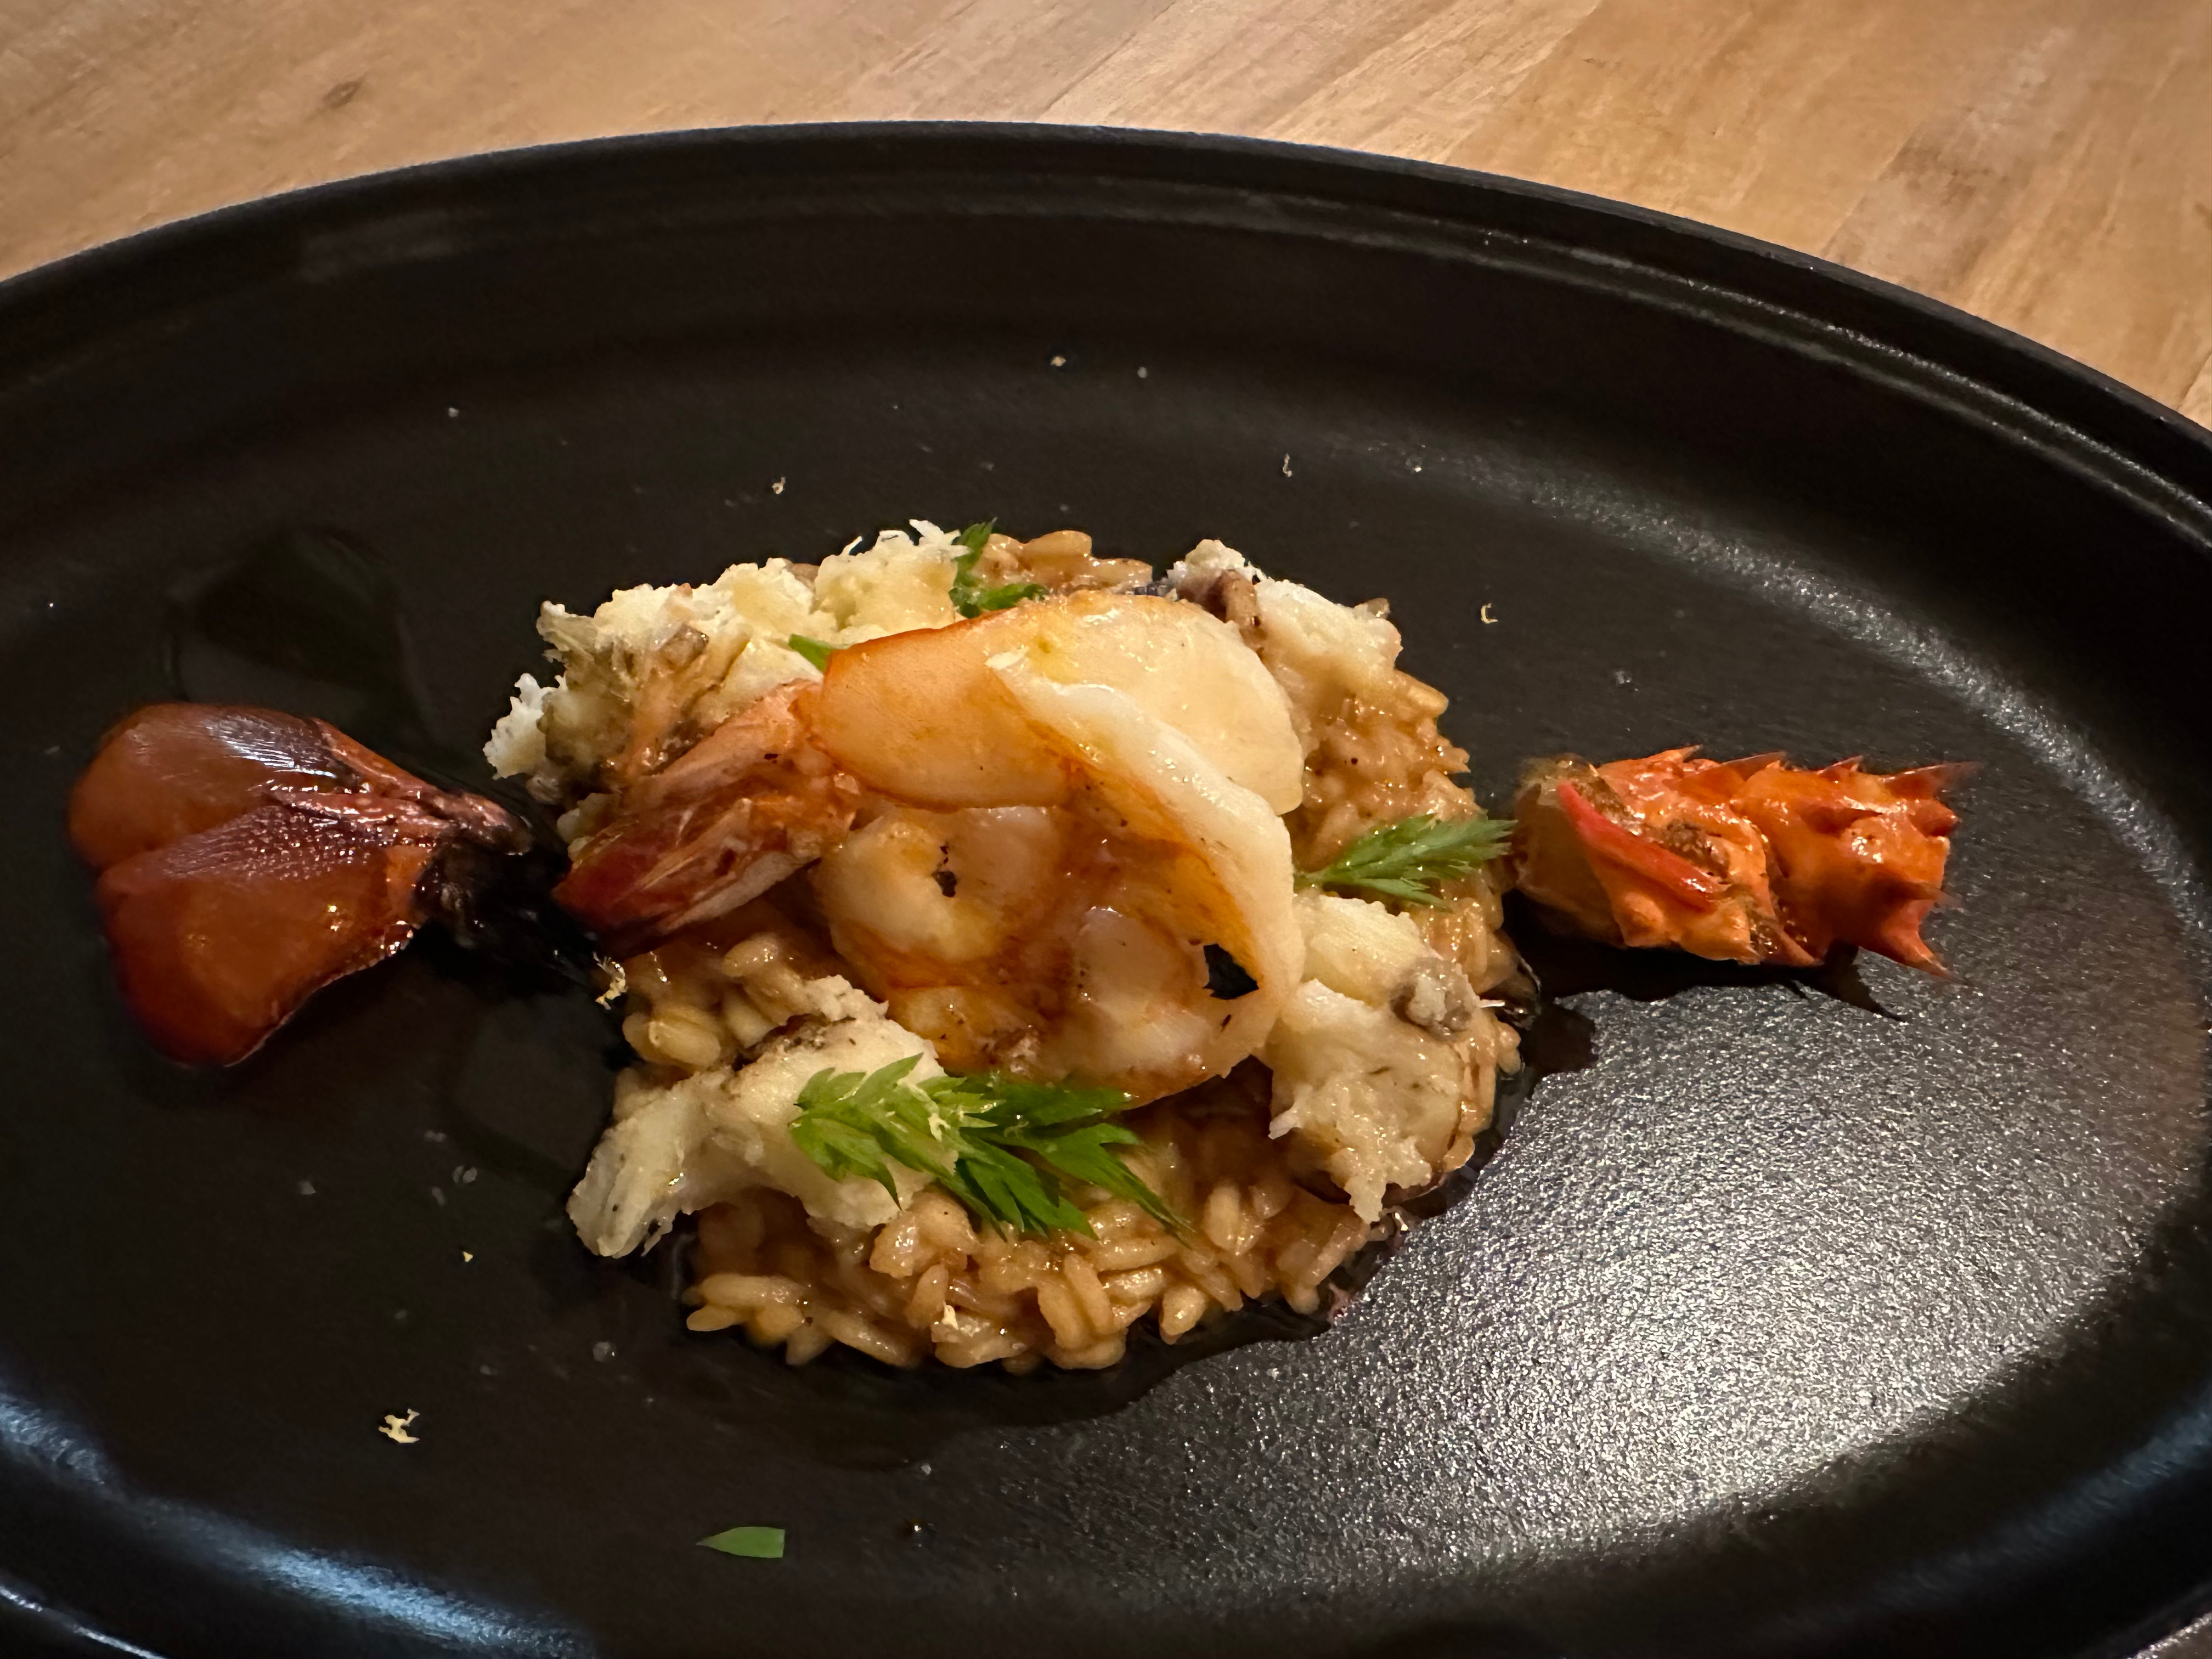 The seafood risotto at Muna Restaurant